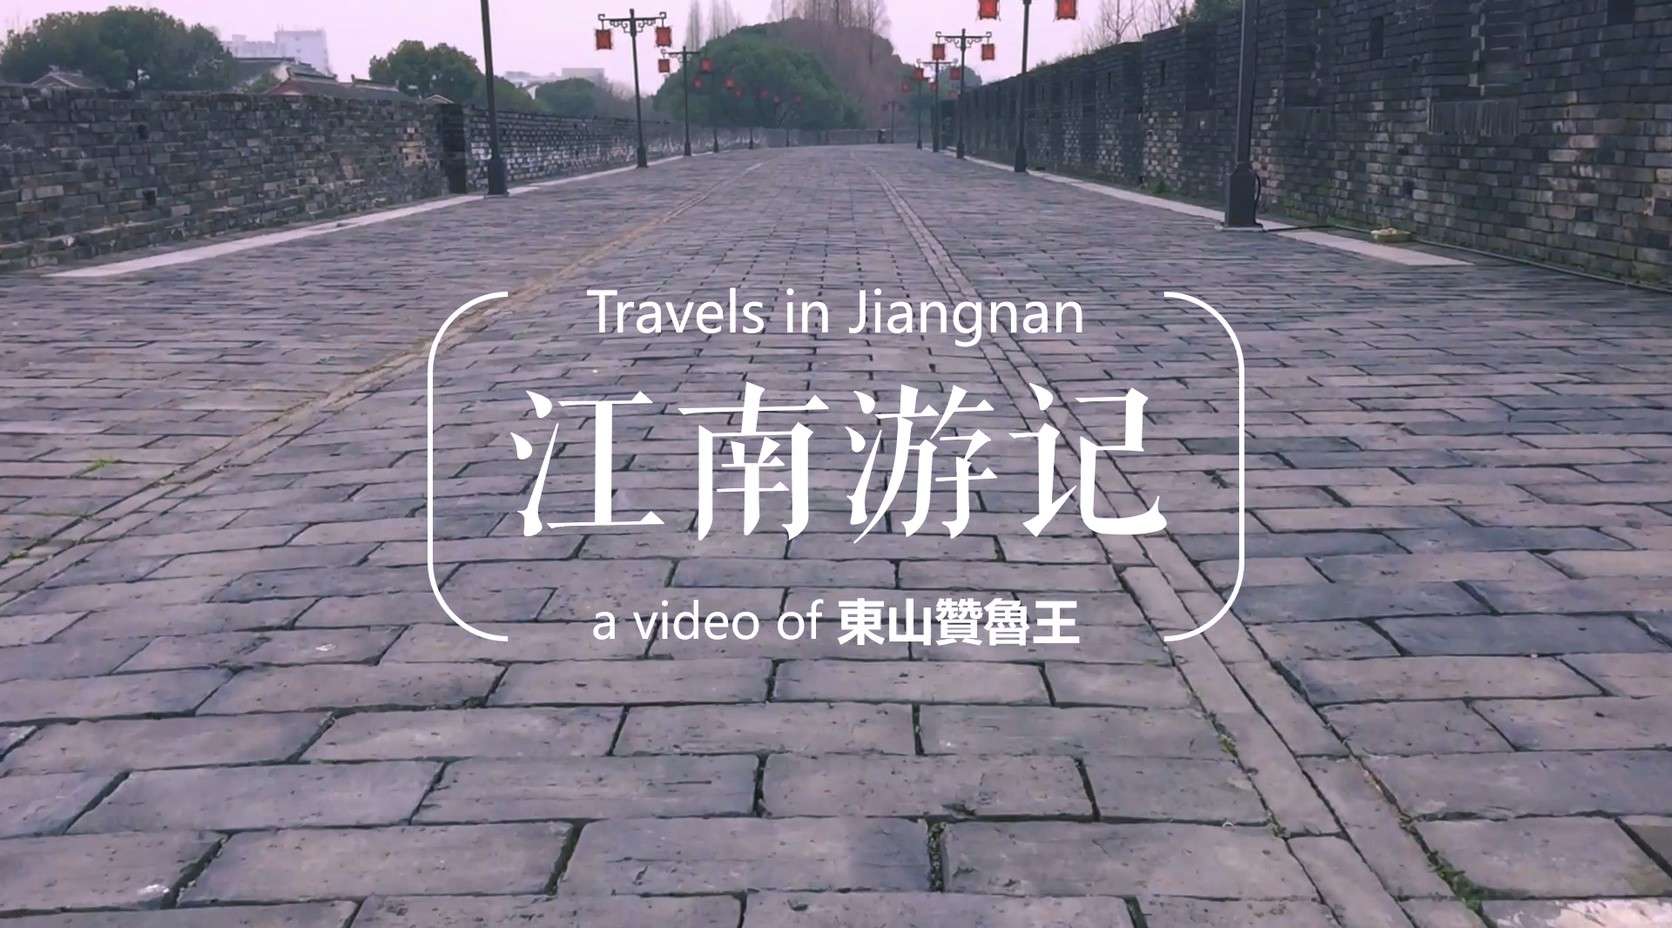 江南游记 Travels in Jiangnan